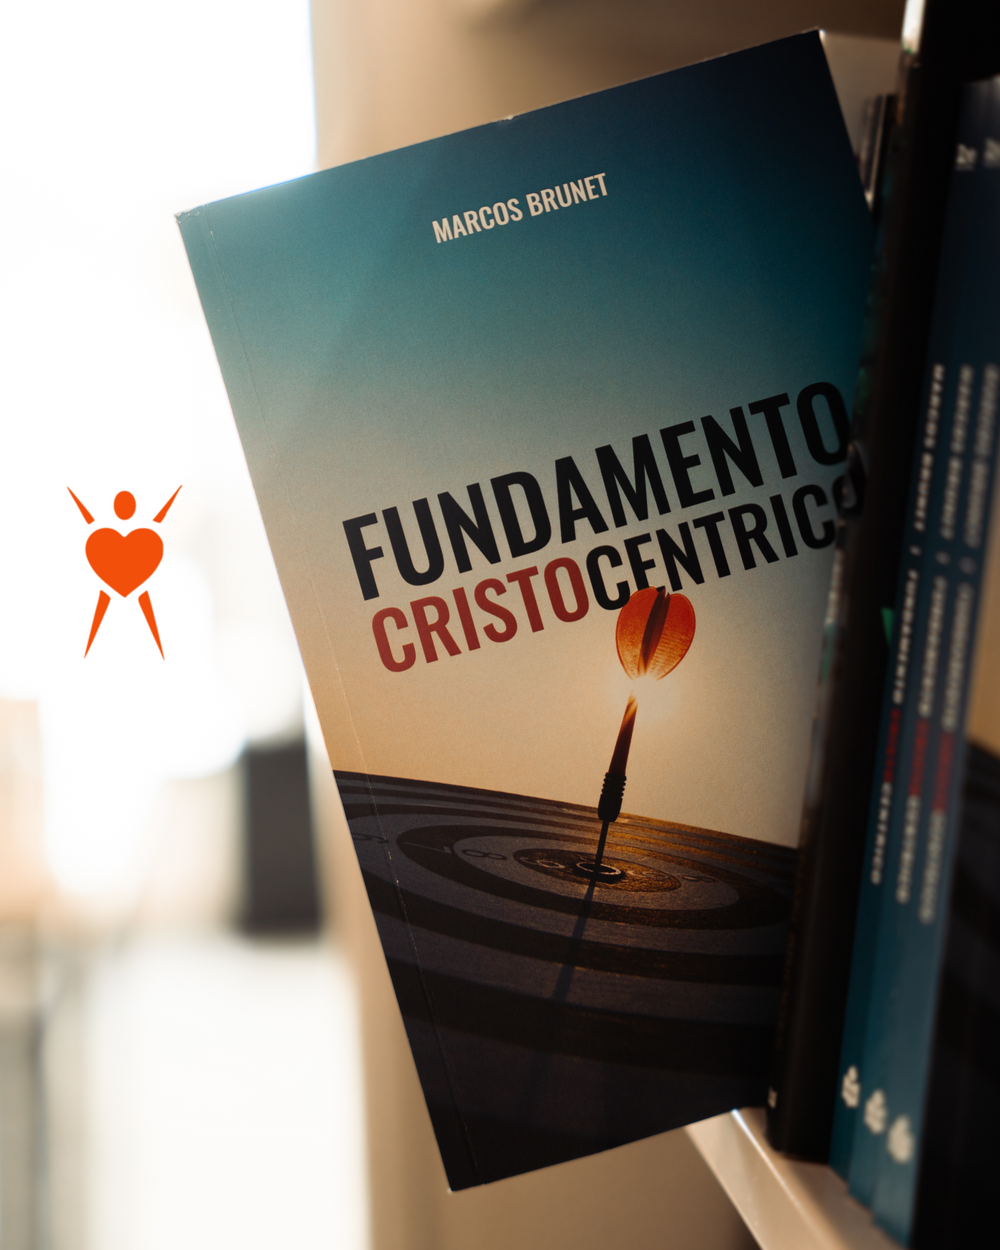 Fundamento Cristocentrico - Marcos Brunet